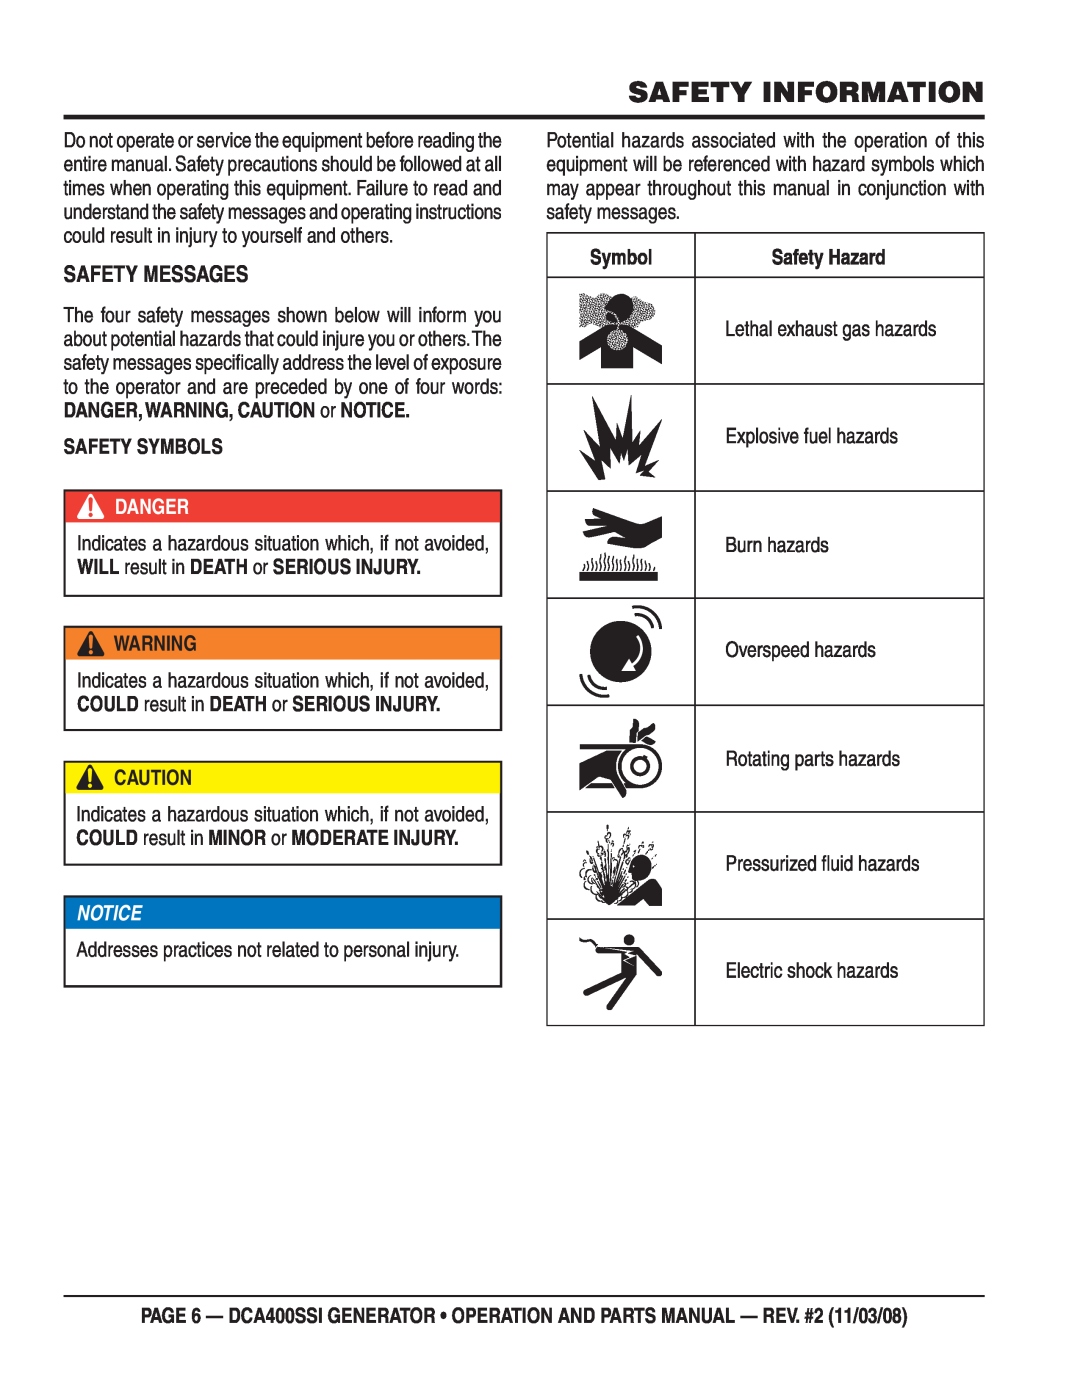 Multiquip DCA400SSI manual Safety Information, Safety Messages, Safety Symbols, Danger, Notice 